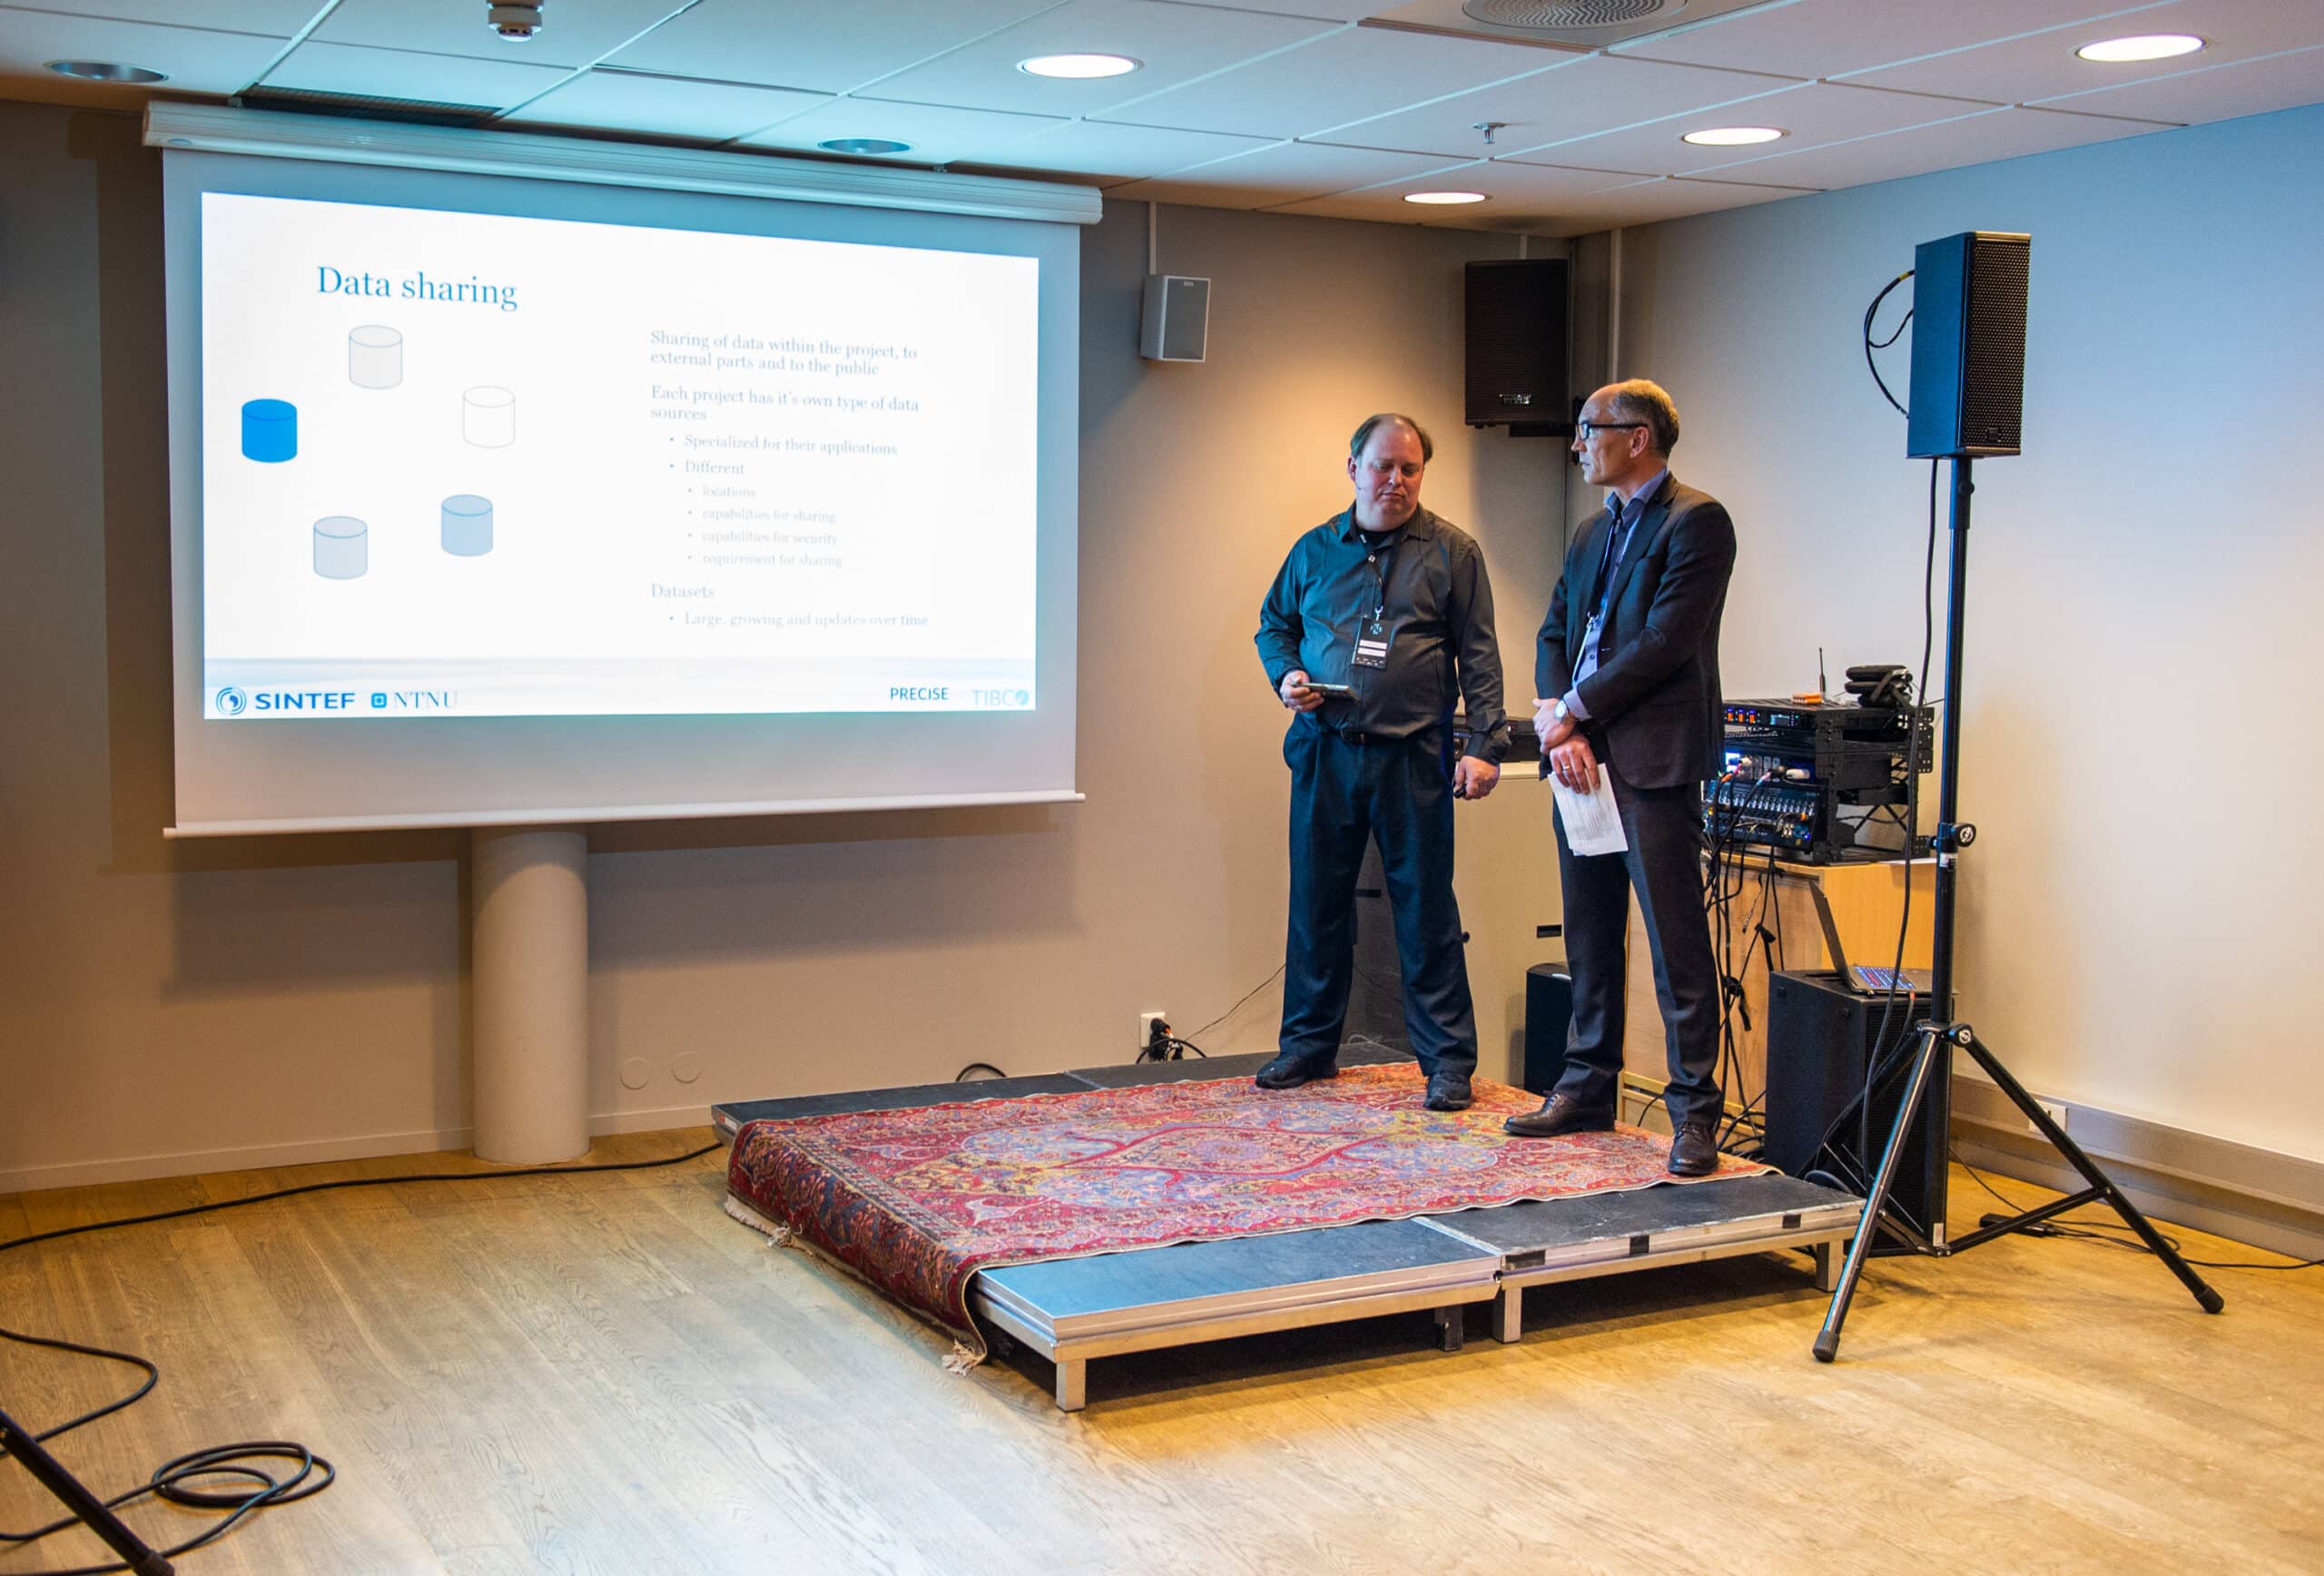 During Demos & Talks Wednesday afternoon, Per Baumann and Per Gunnar Auran, talked about dataflow at sea. PHOTO: Stein Johnsen, Contentvideo.no